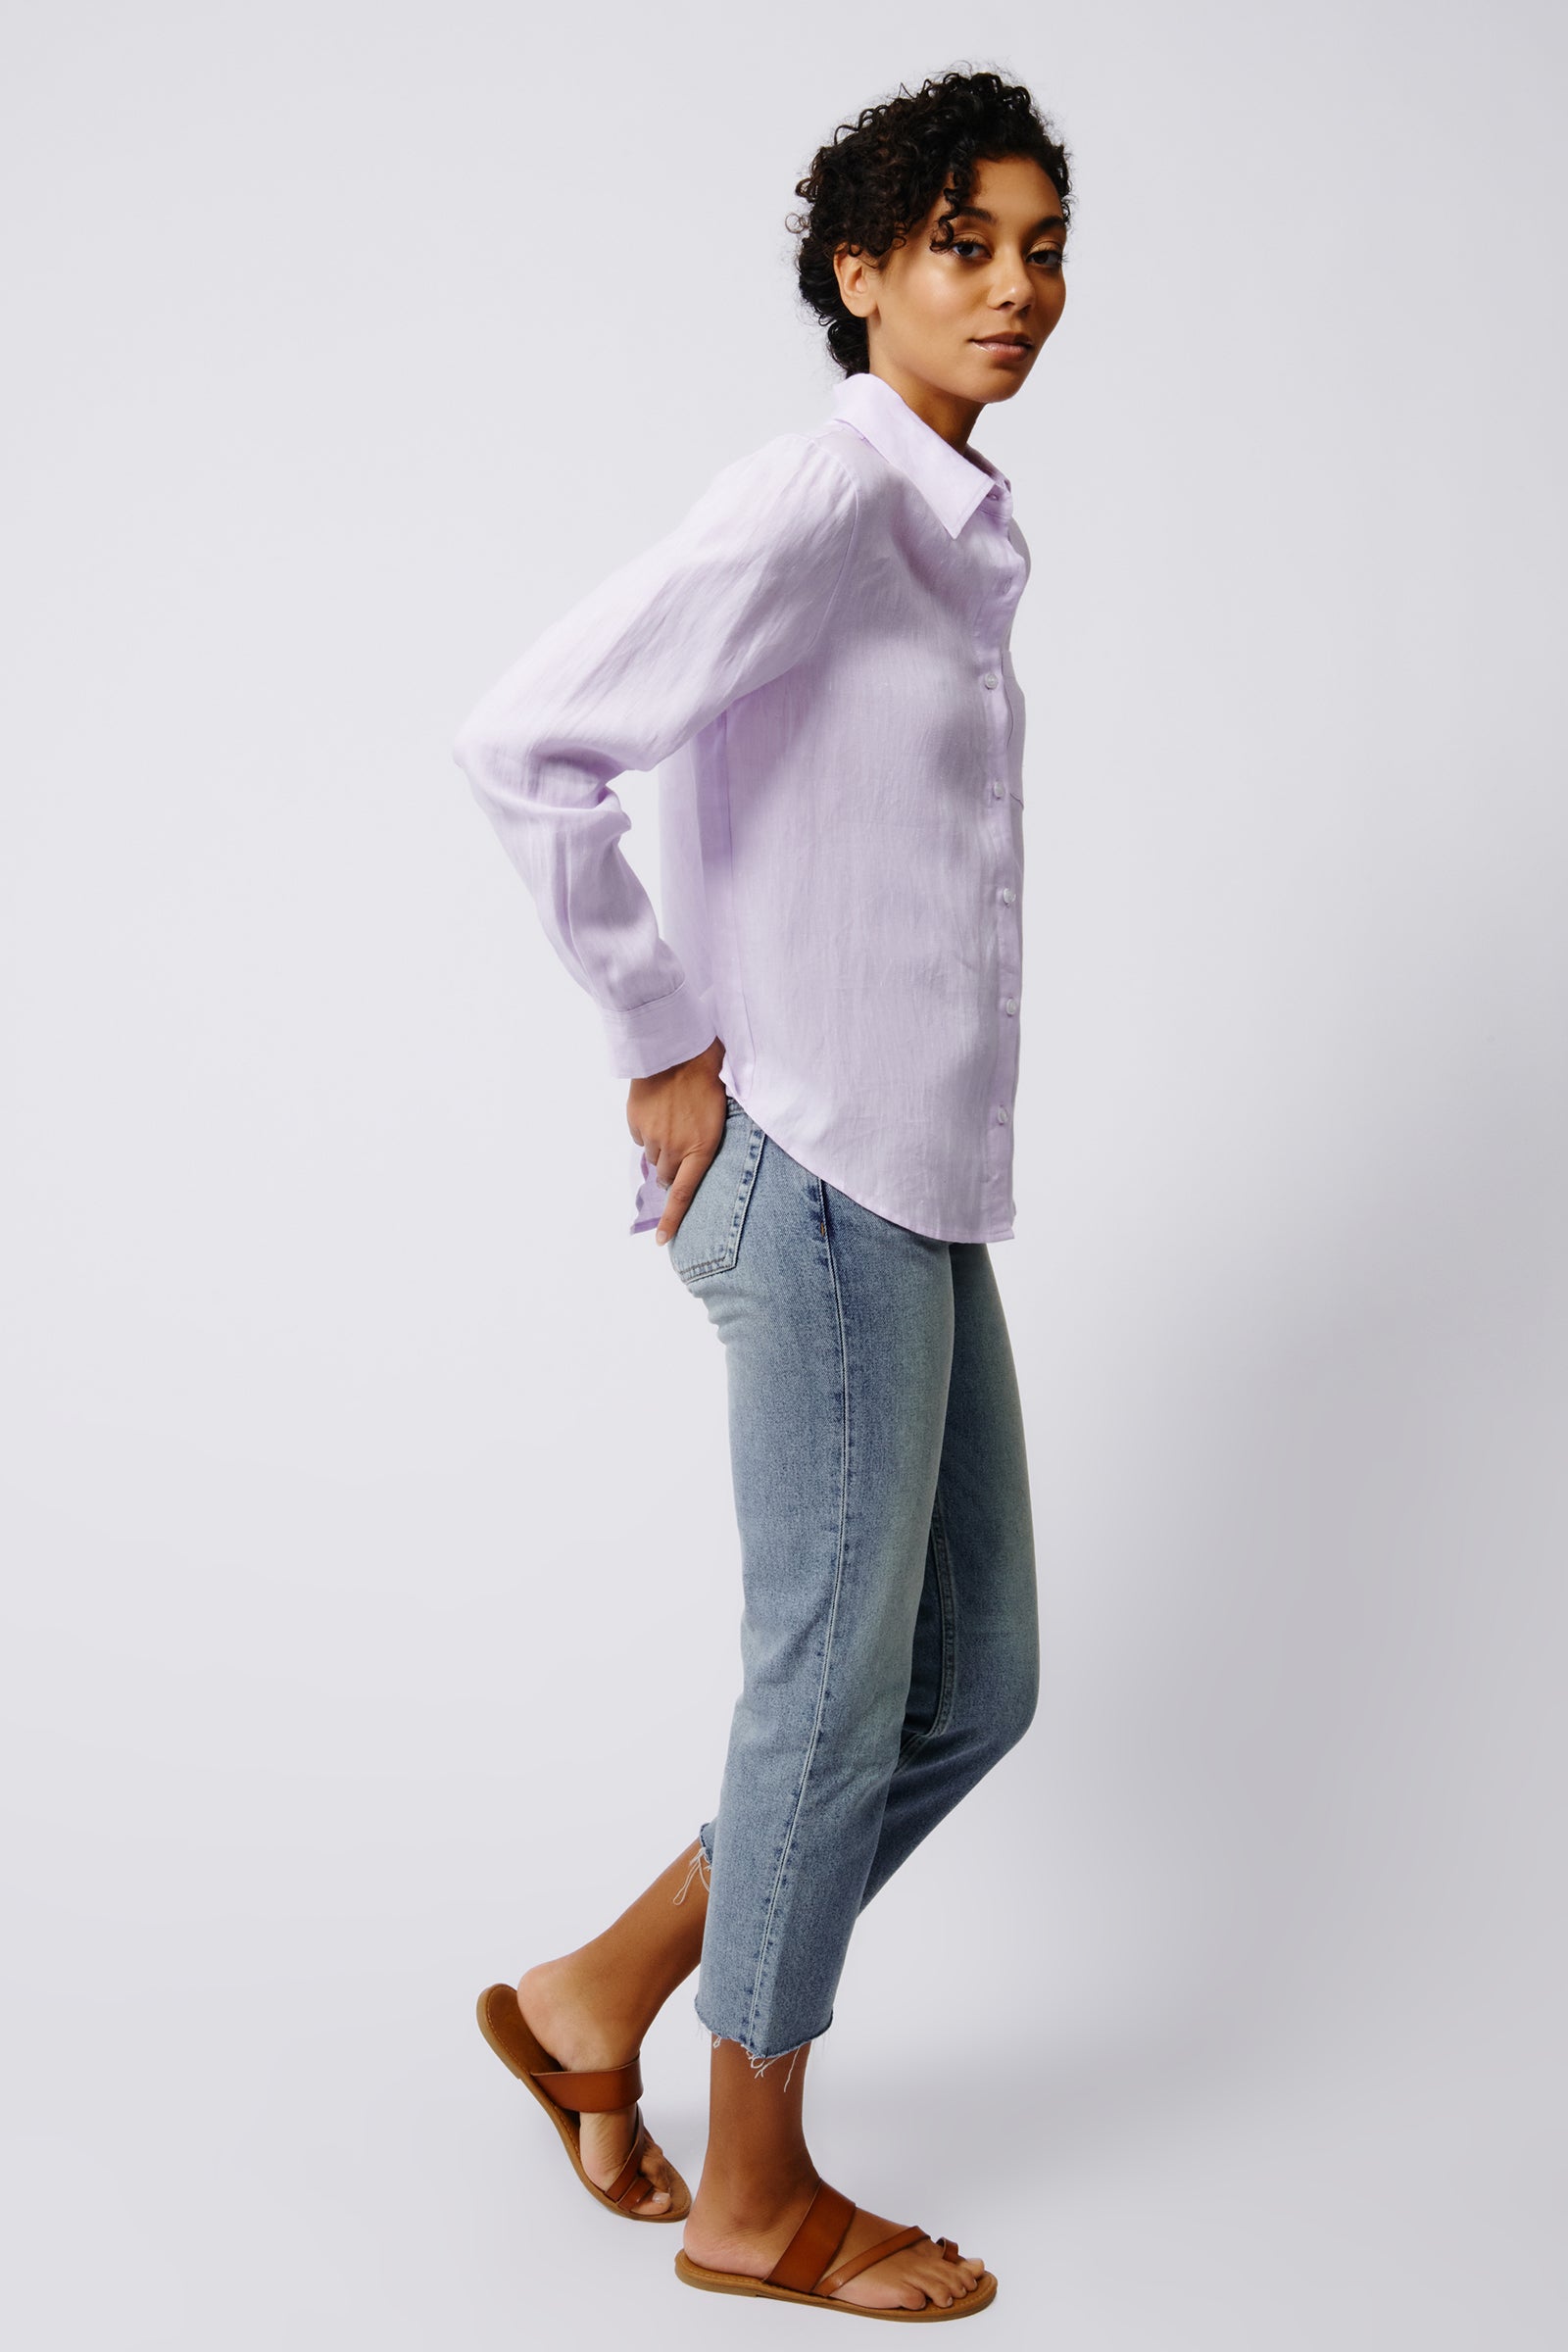 Kal Rieman Summer Shirt in Lavender on Model Full Side View